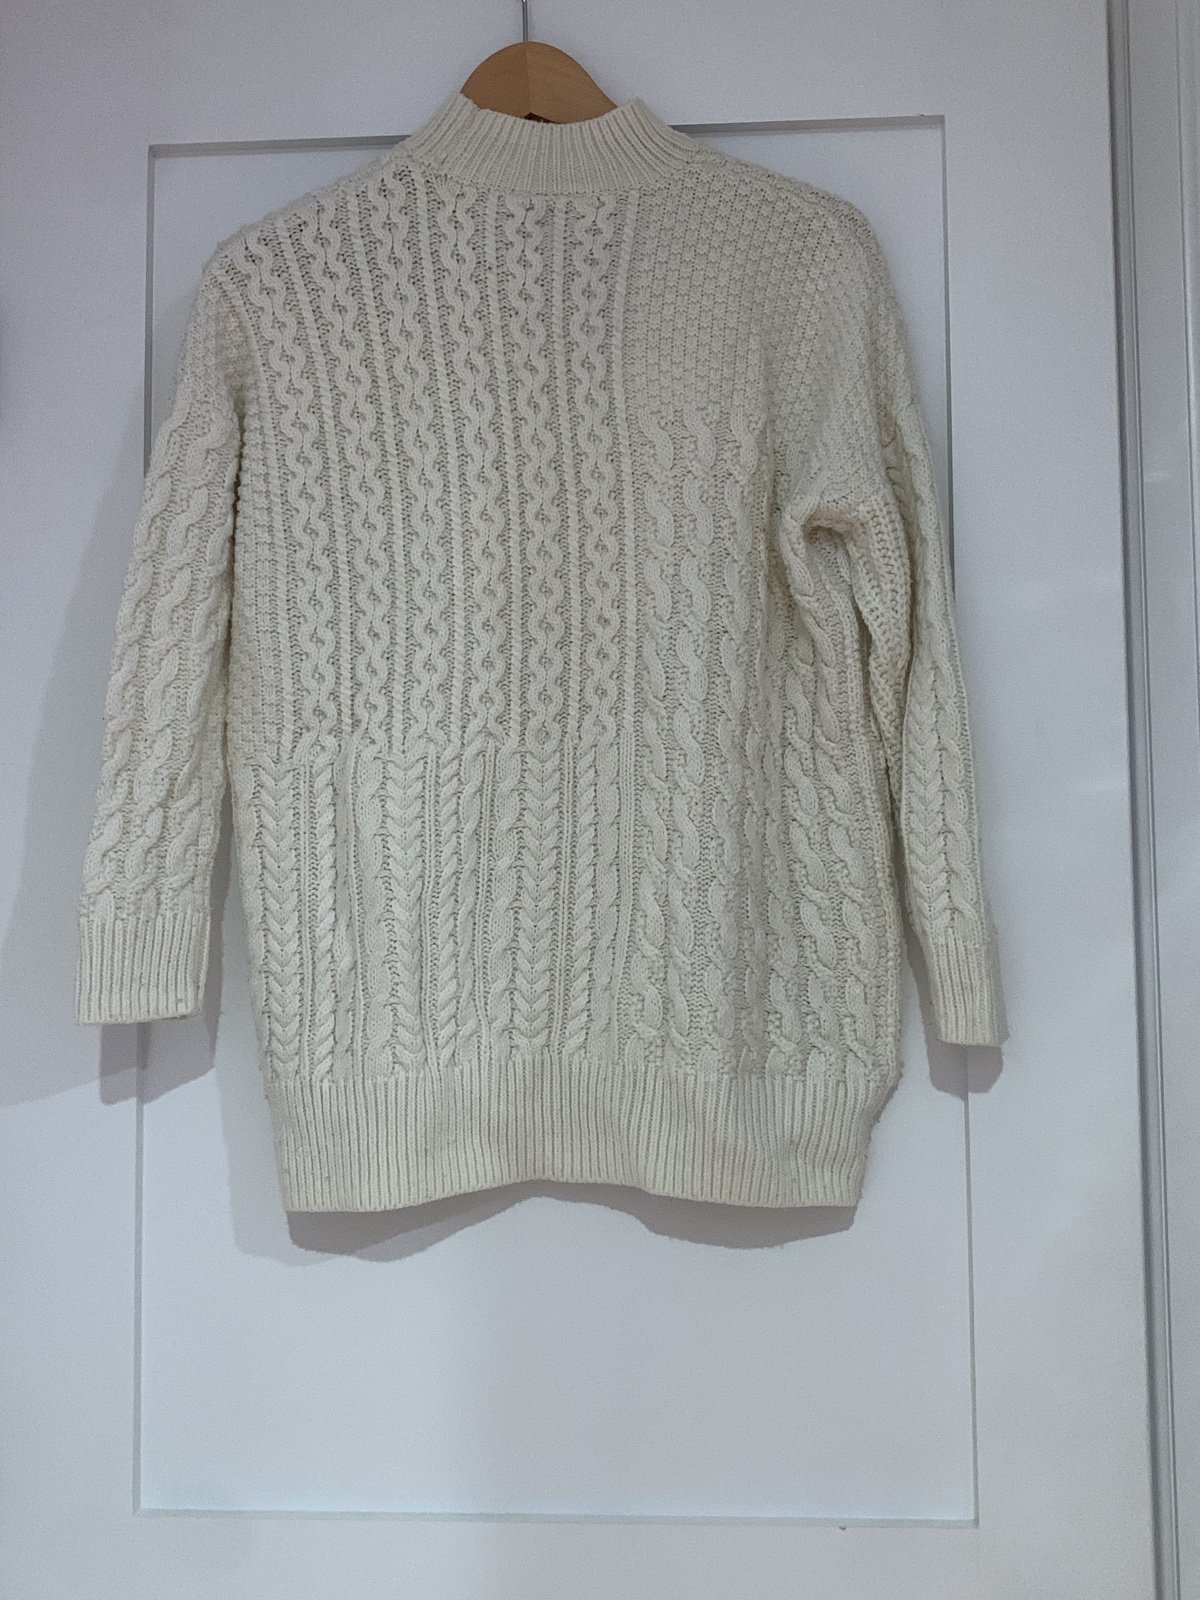 Affordable Sweater FKujV600J Outlet Store